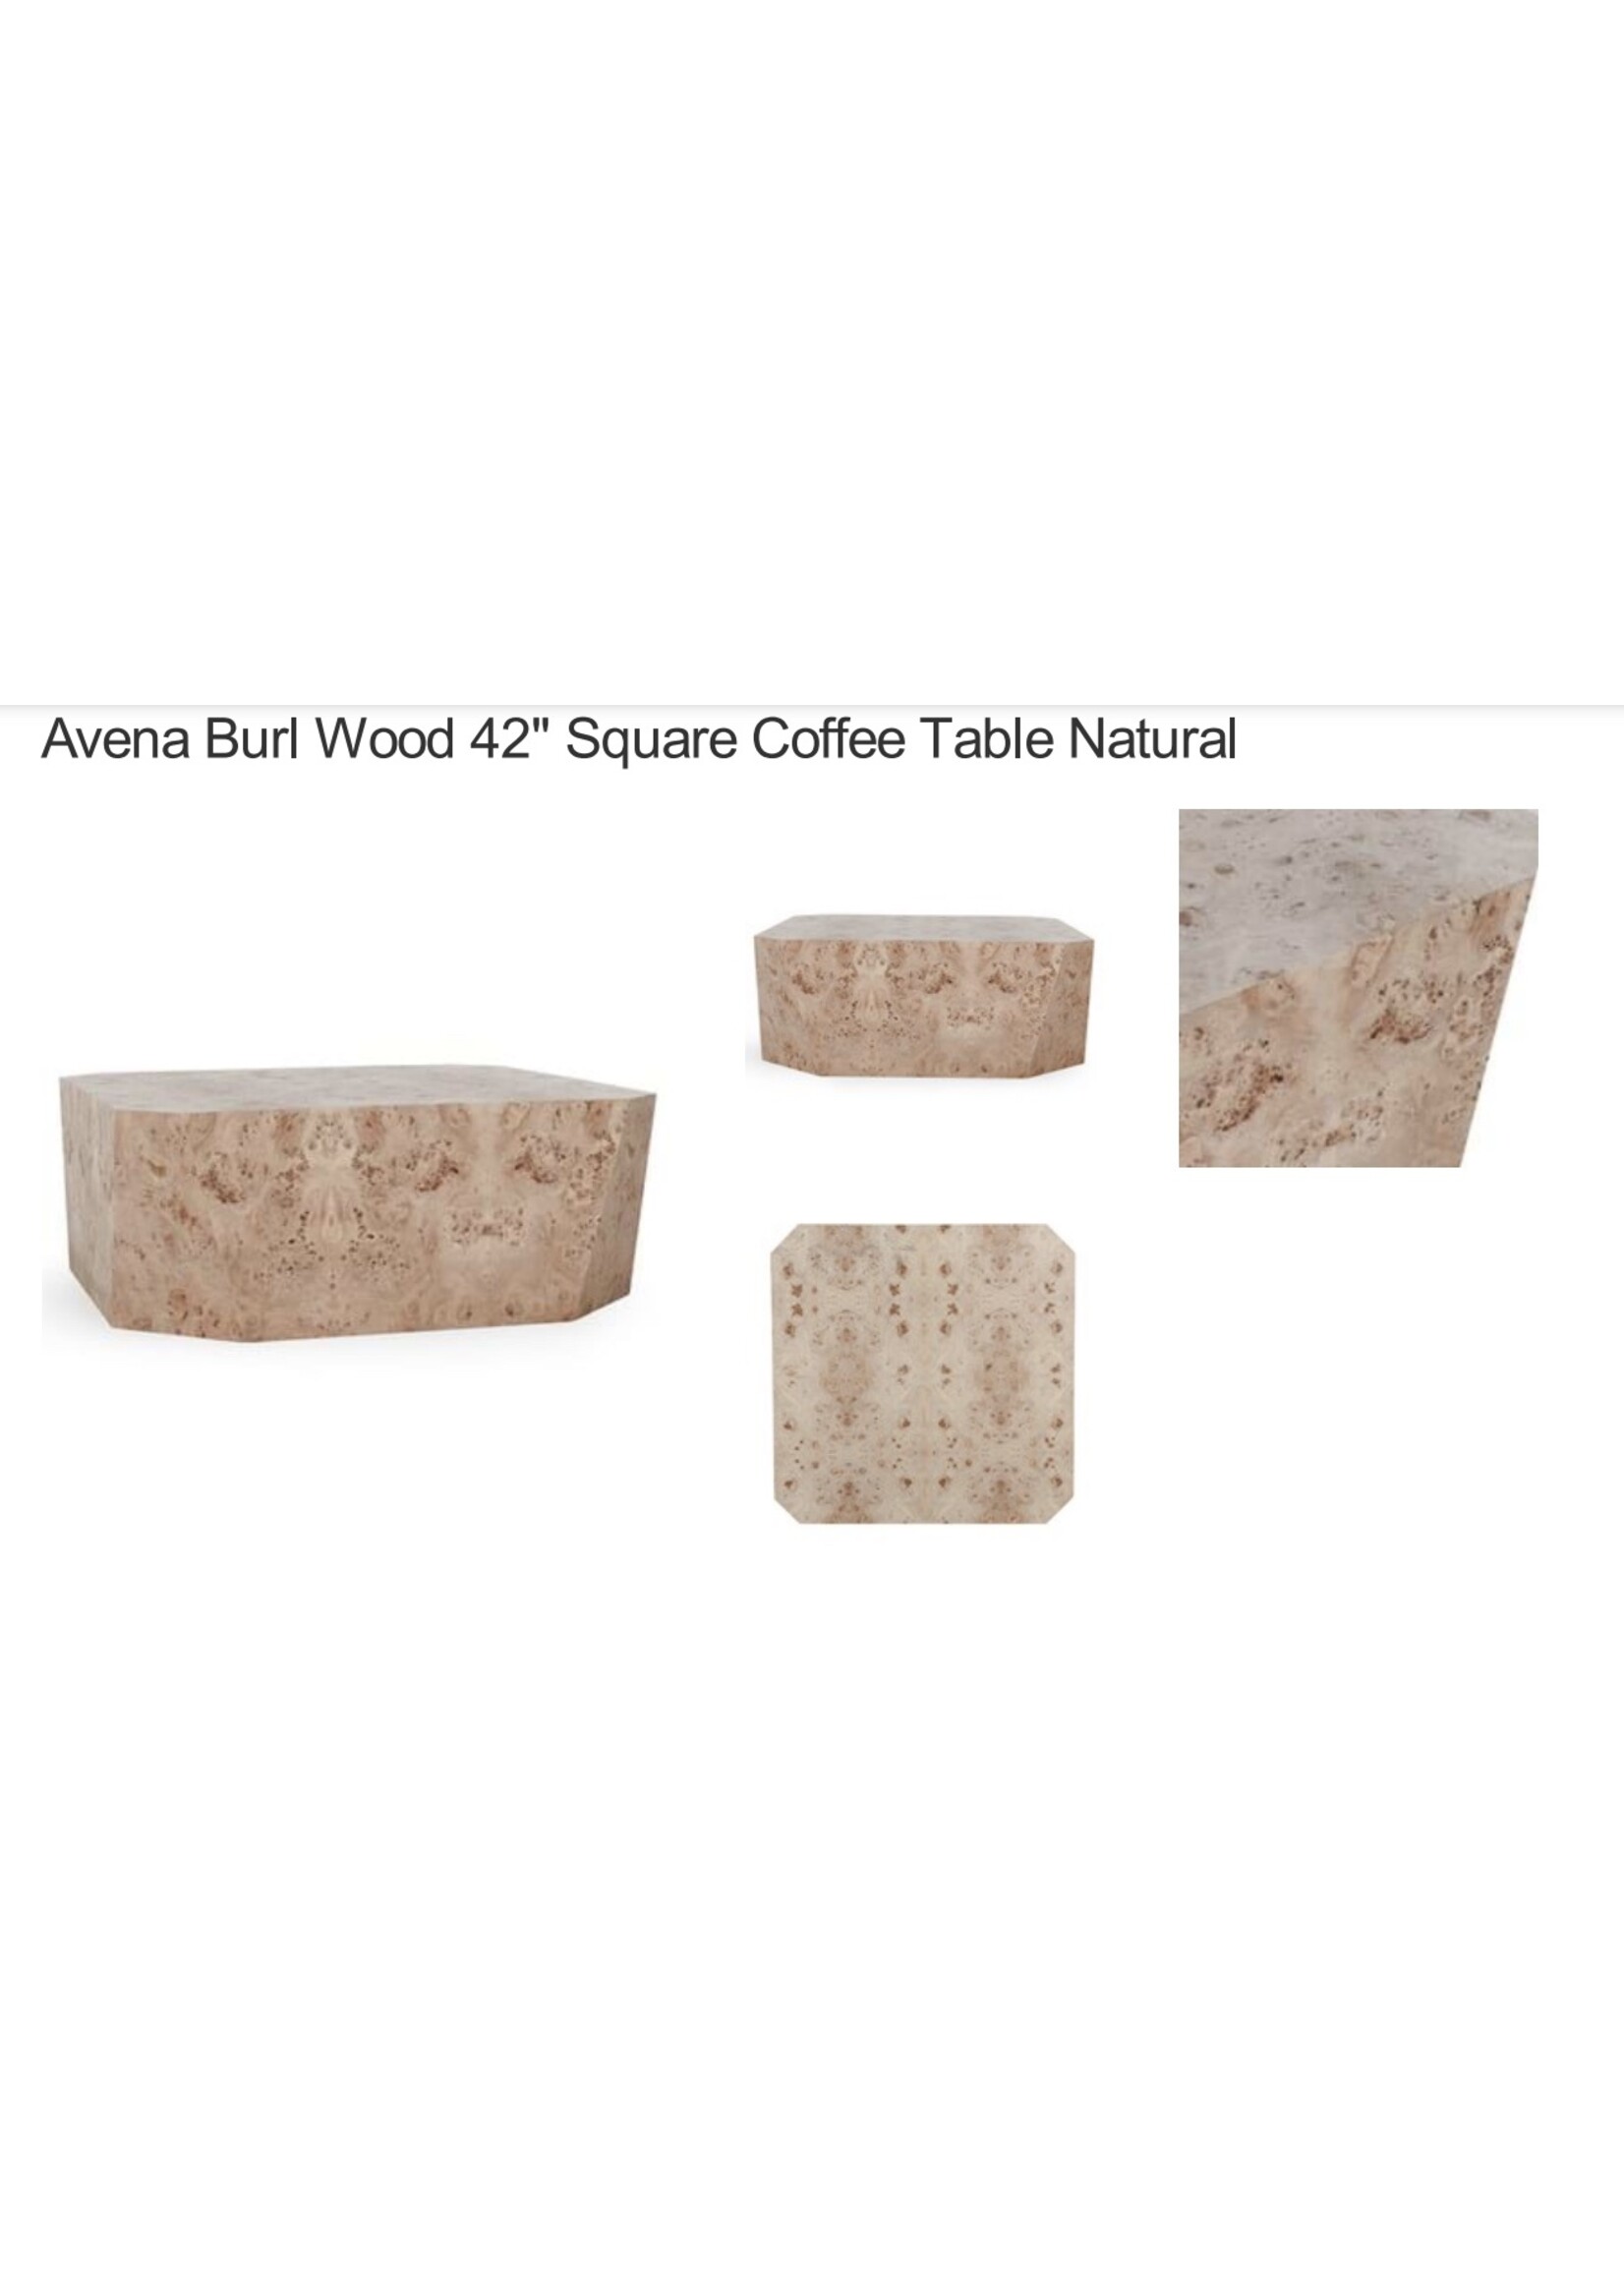 AVENA BURL WOOD 42" SQUARE COFFEE TABLE NATURAL 42"